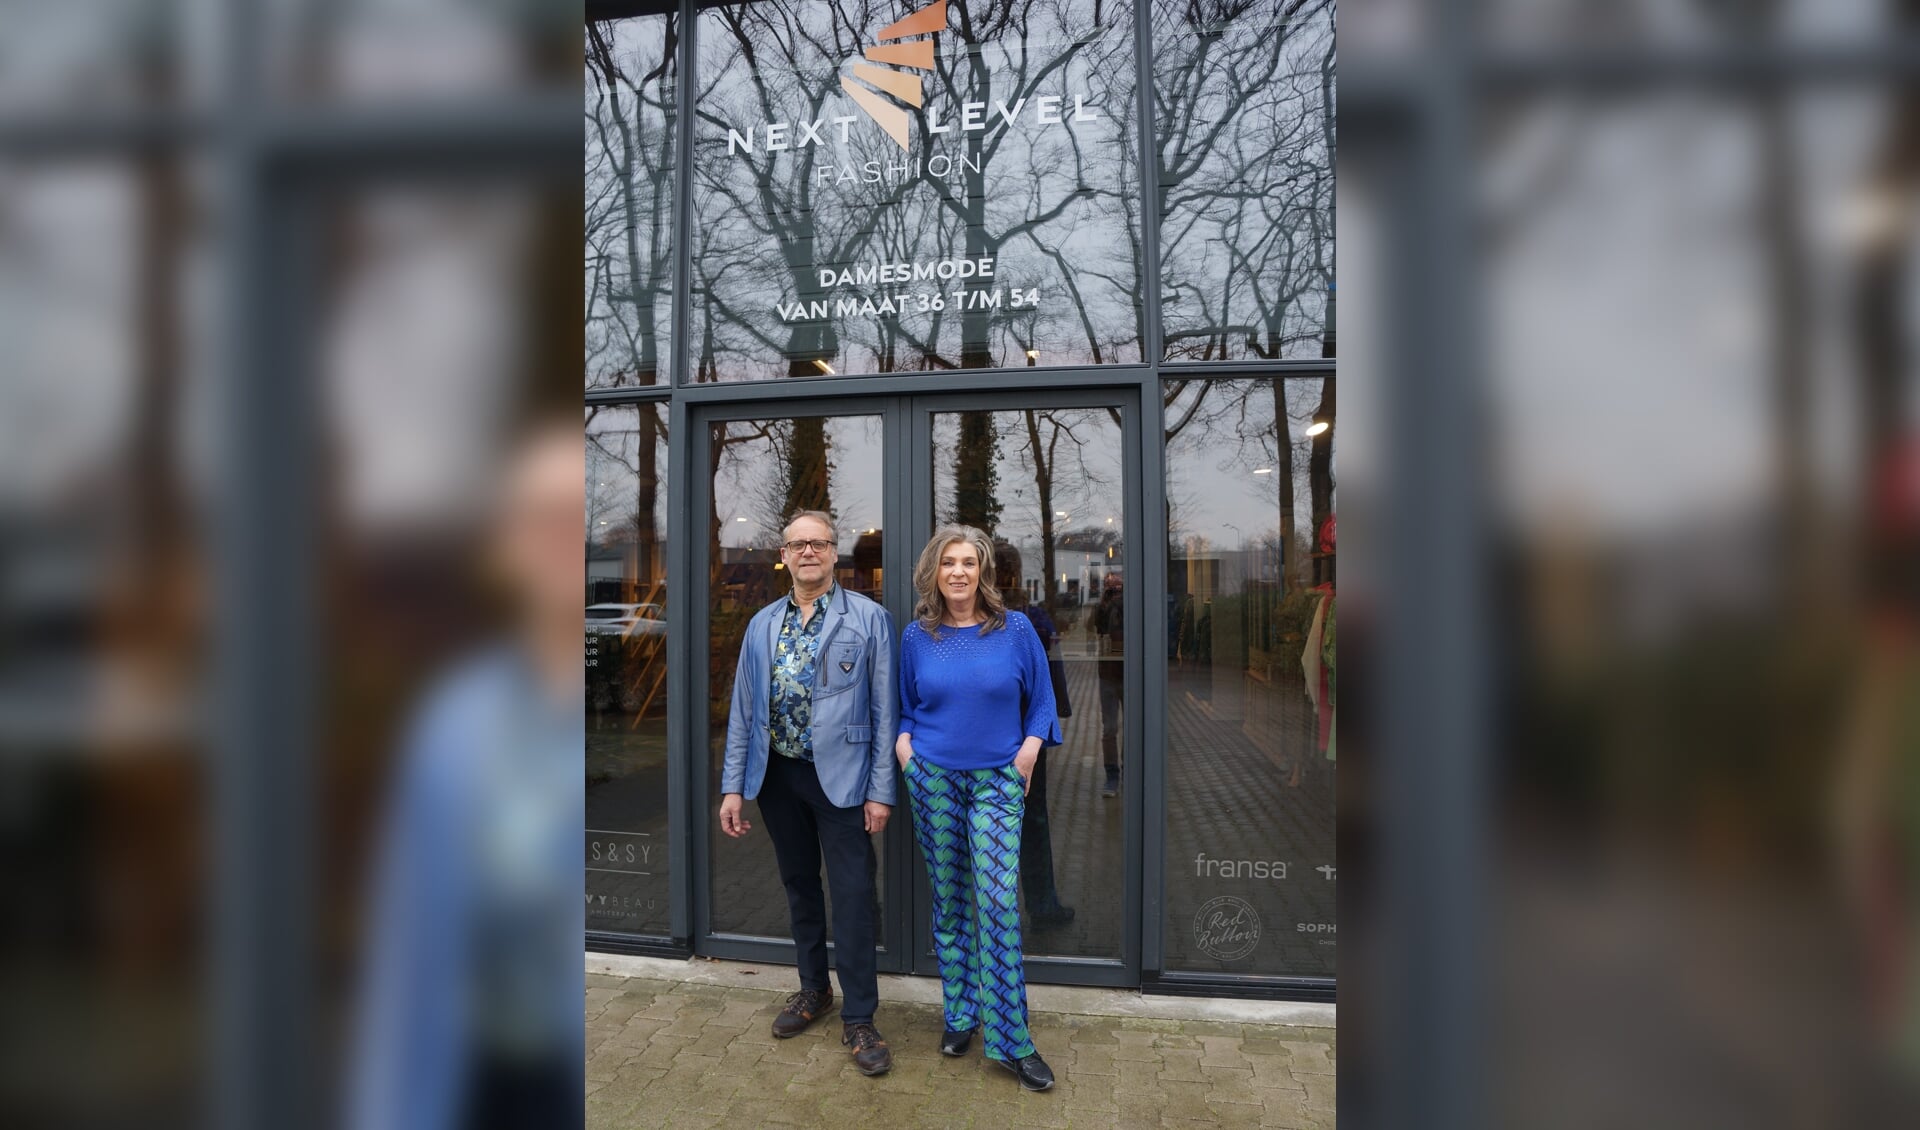 Gert Kraaijenzang en Heidi Gosselink van damesmodezaak Next Level Fashion. Foto: Richard Stegers